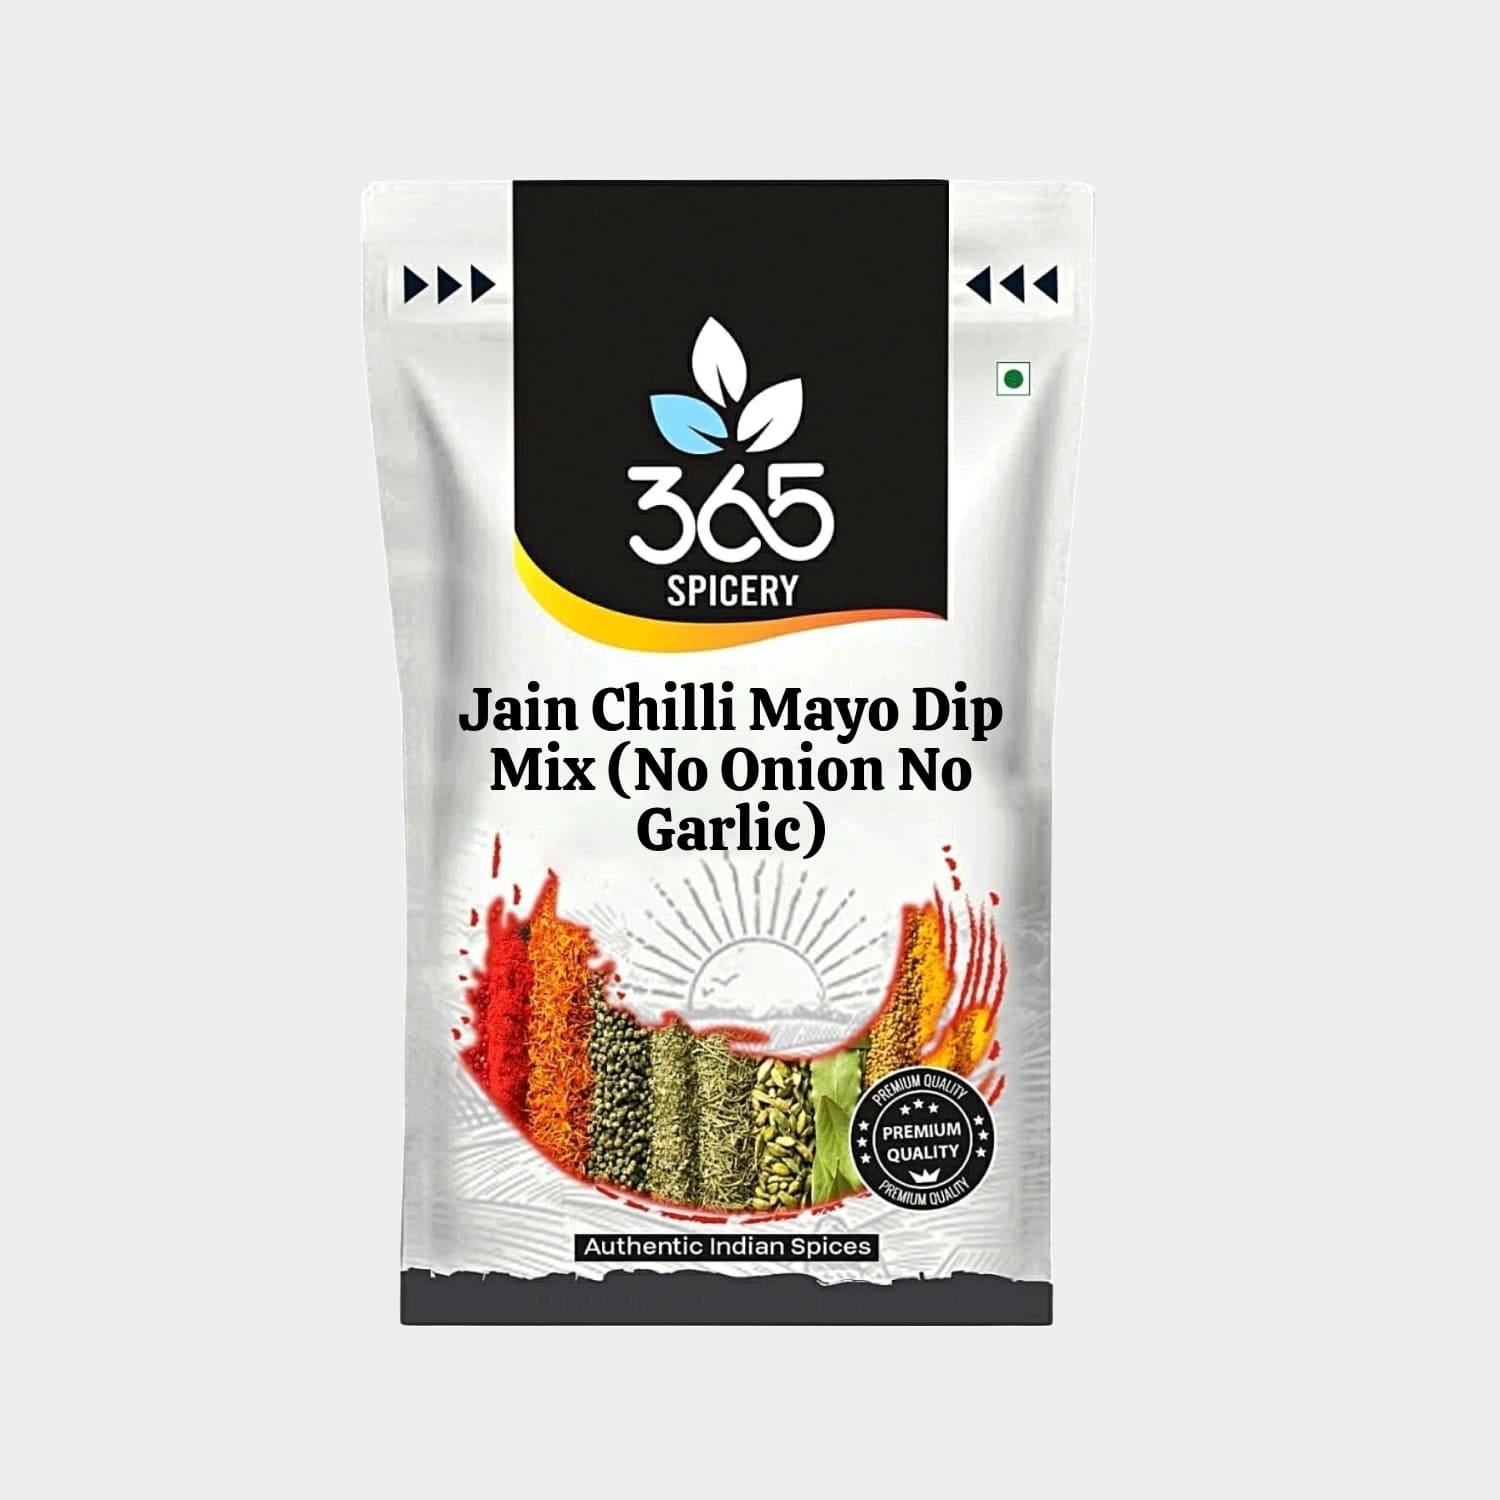 Jain Chilli Mayo Dip Mix (No Onion No Garlic)